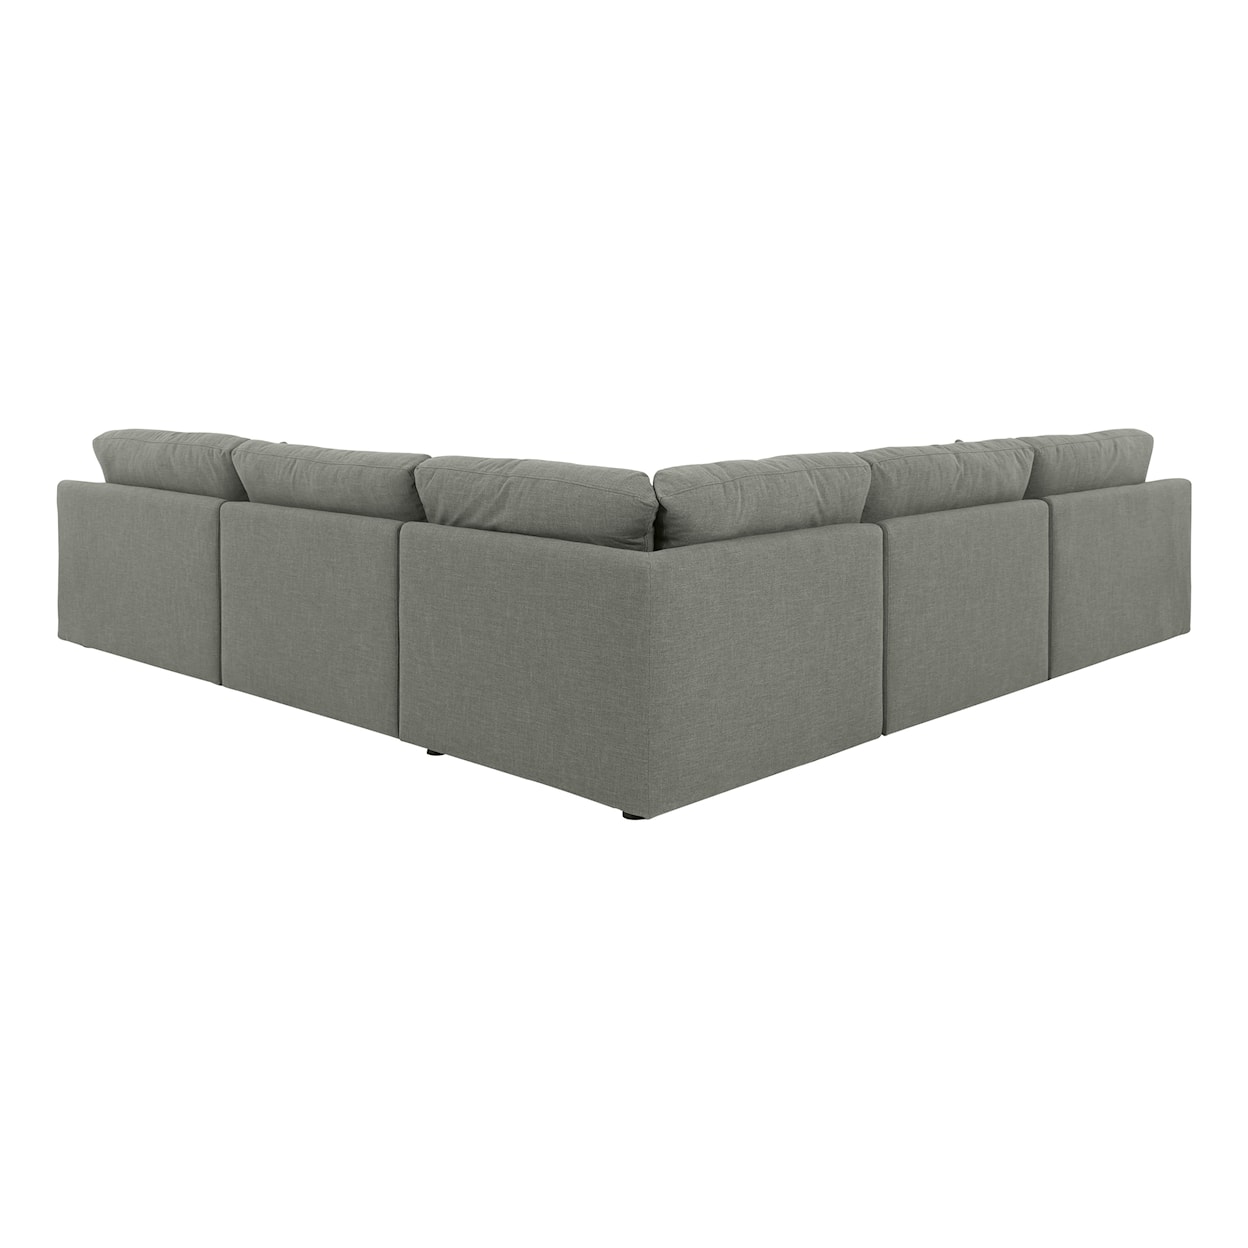 Ashley Furniture Benchcraft Elyza 5-Piece Modular Sectional